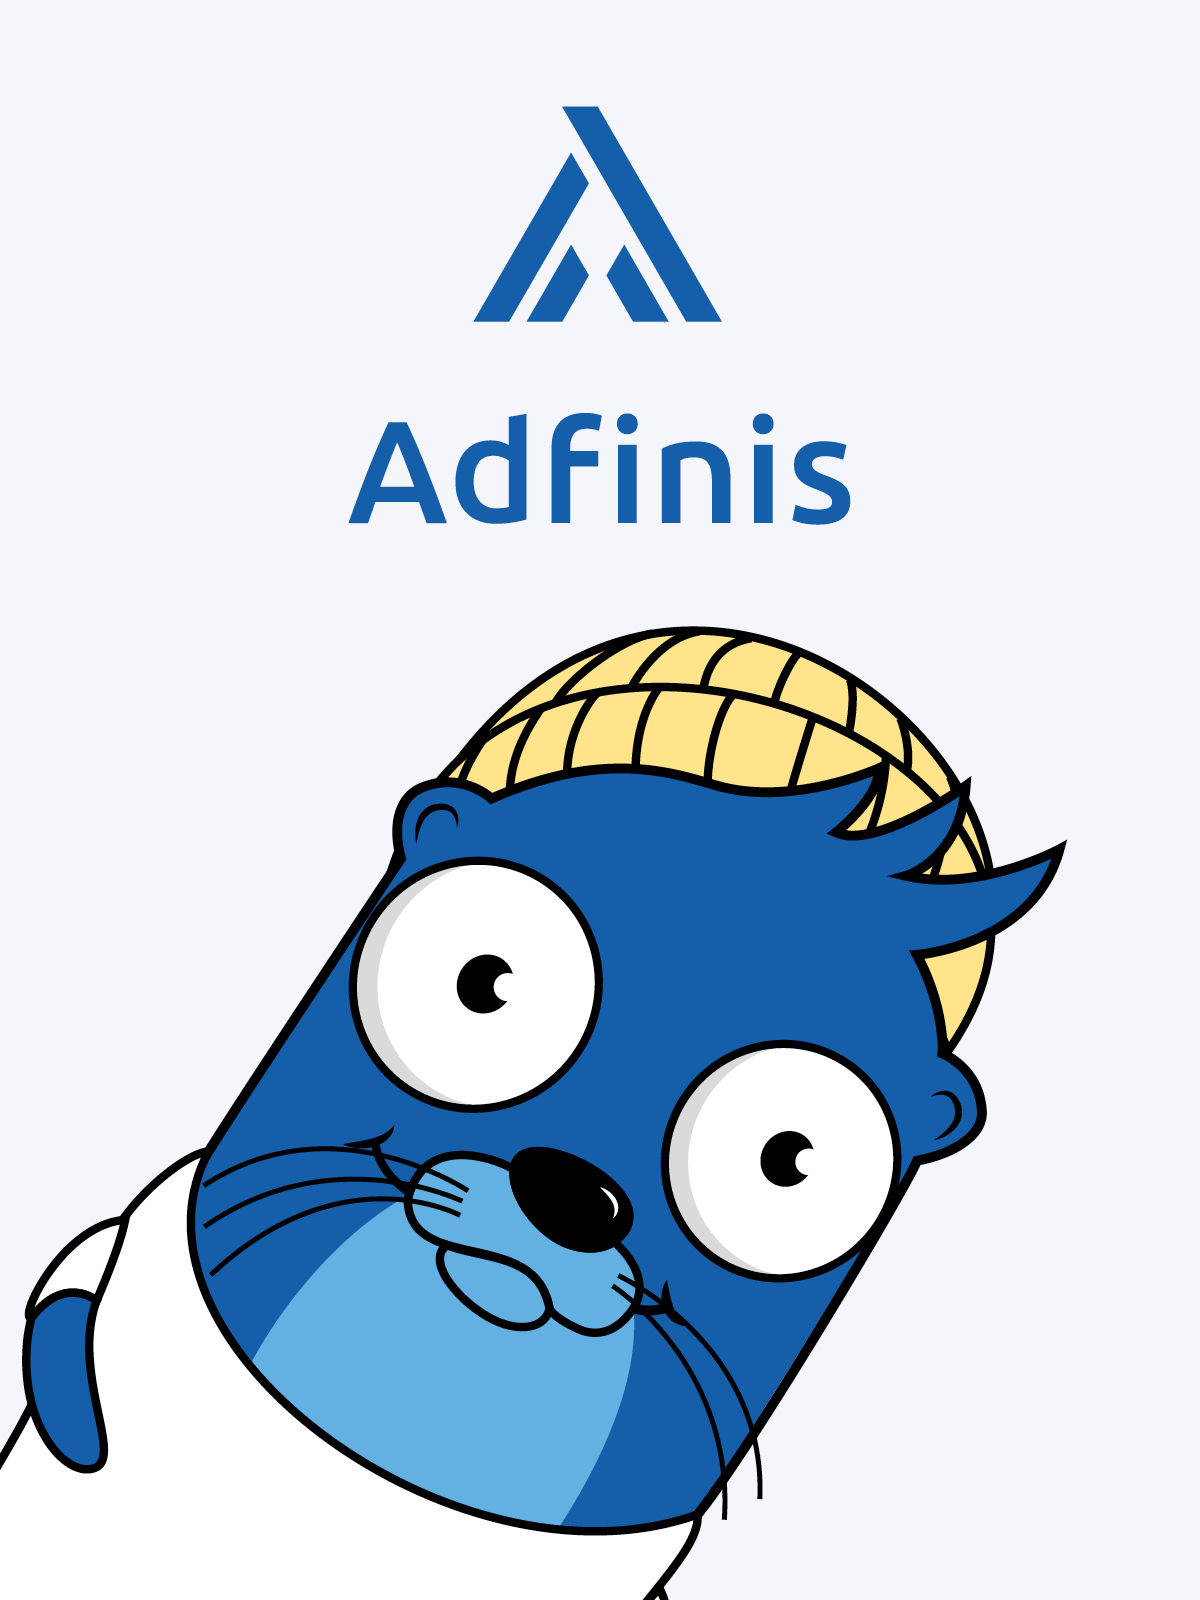 Adfinis AG